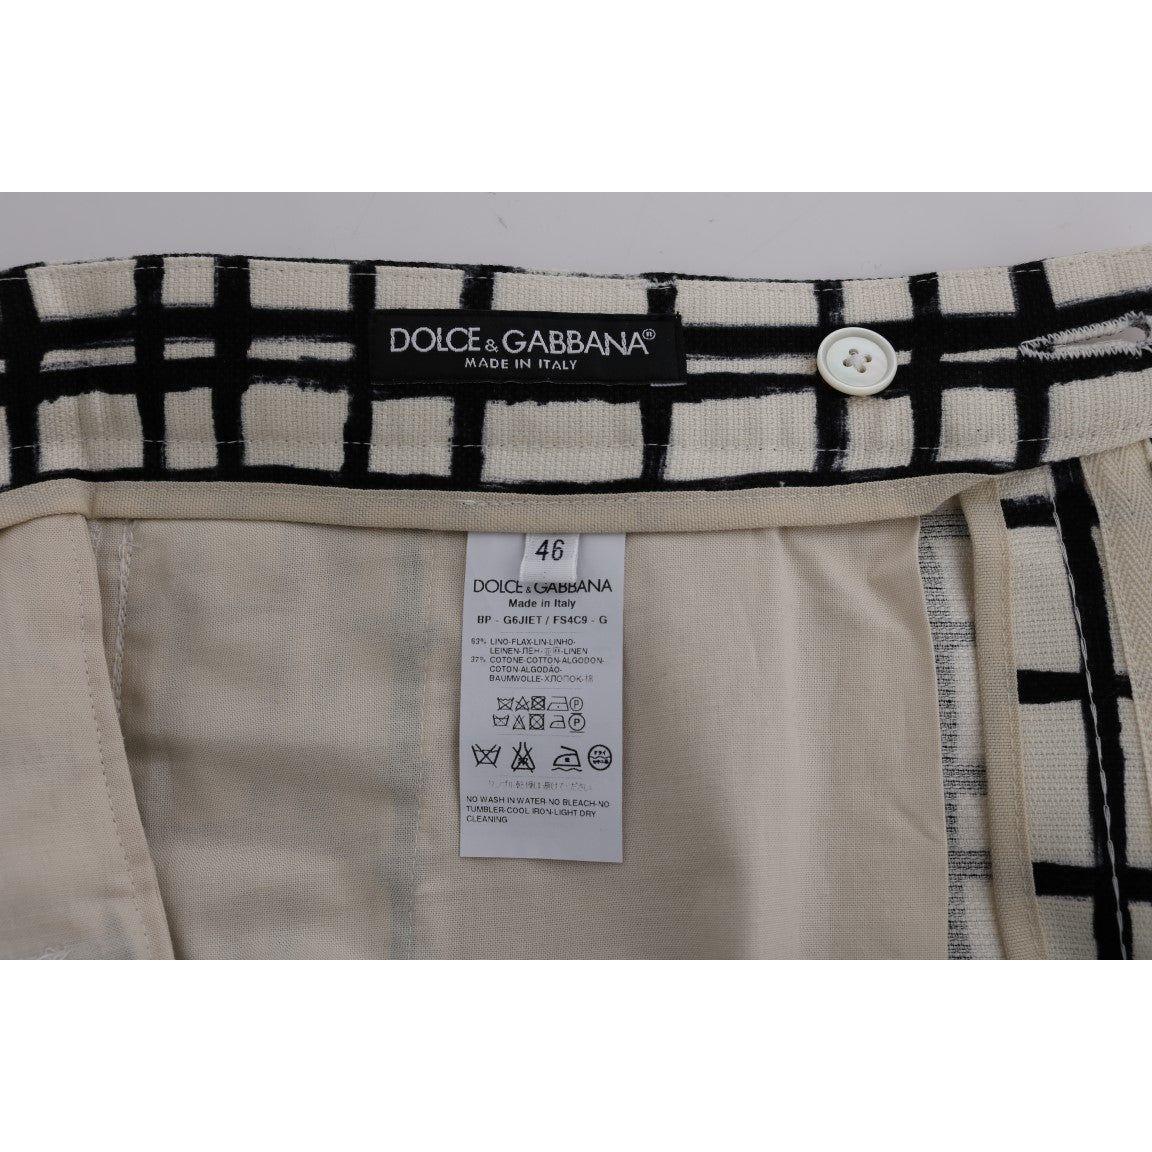 Dolce & Gabbana Elegant Striped Cotton-Linen Shorts white-black-striped-casual-shorts 443610-white-black-striped-casual-shorts-5.jpg